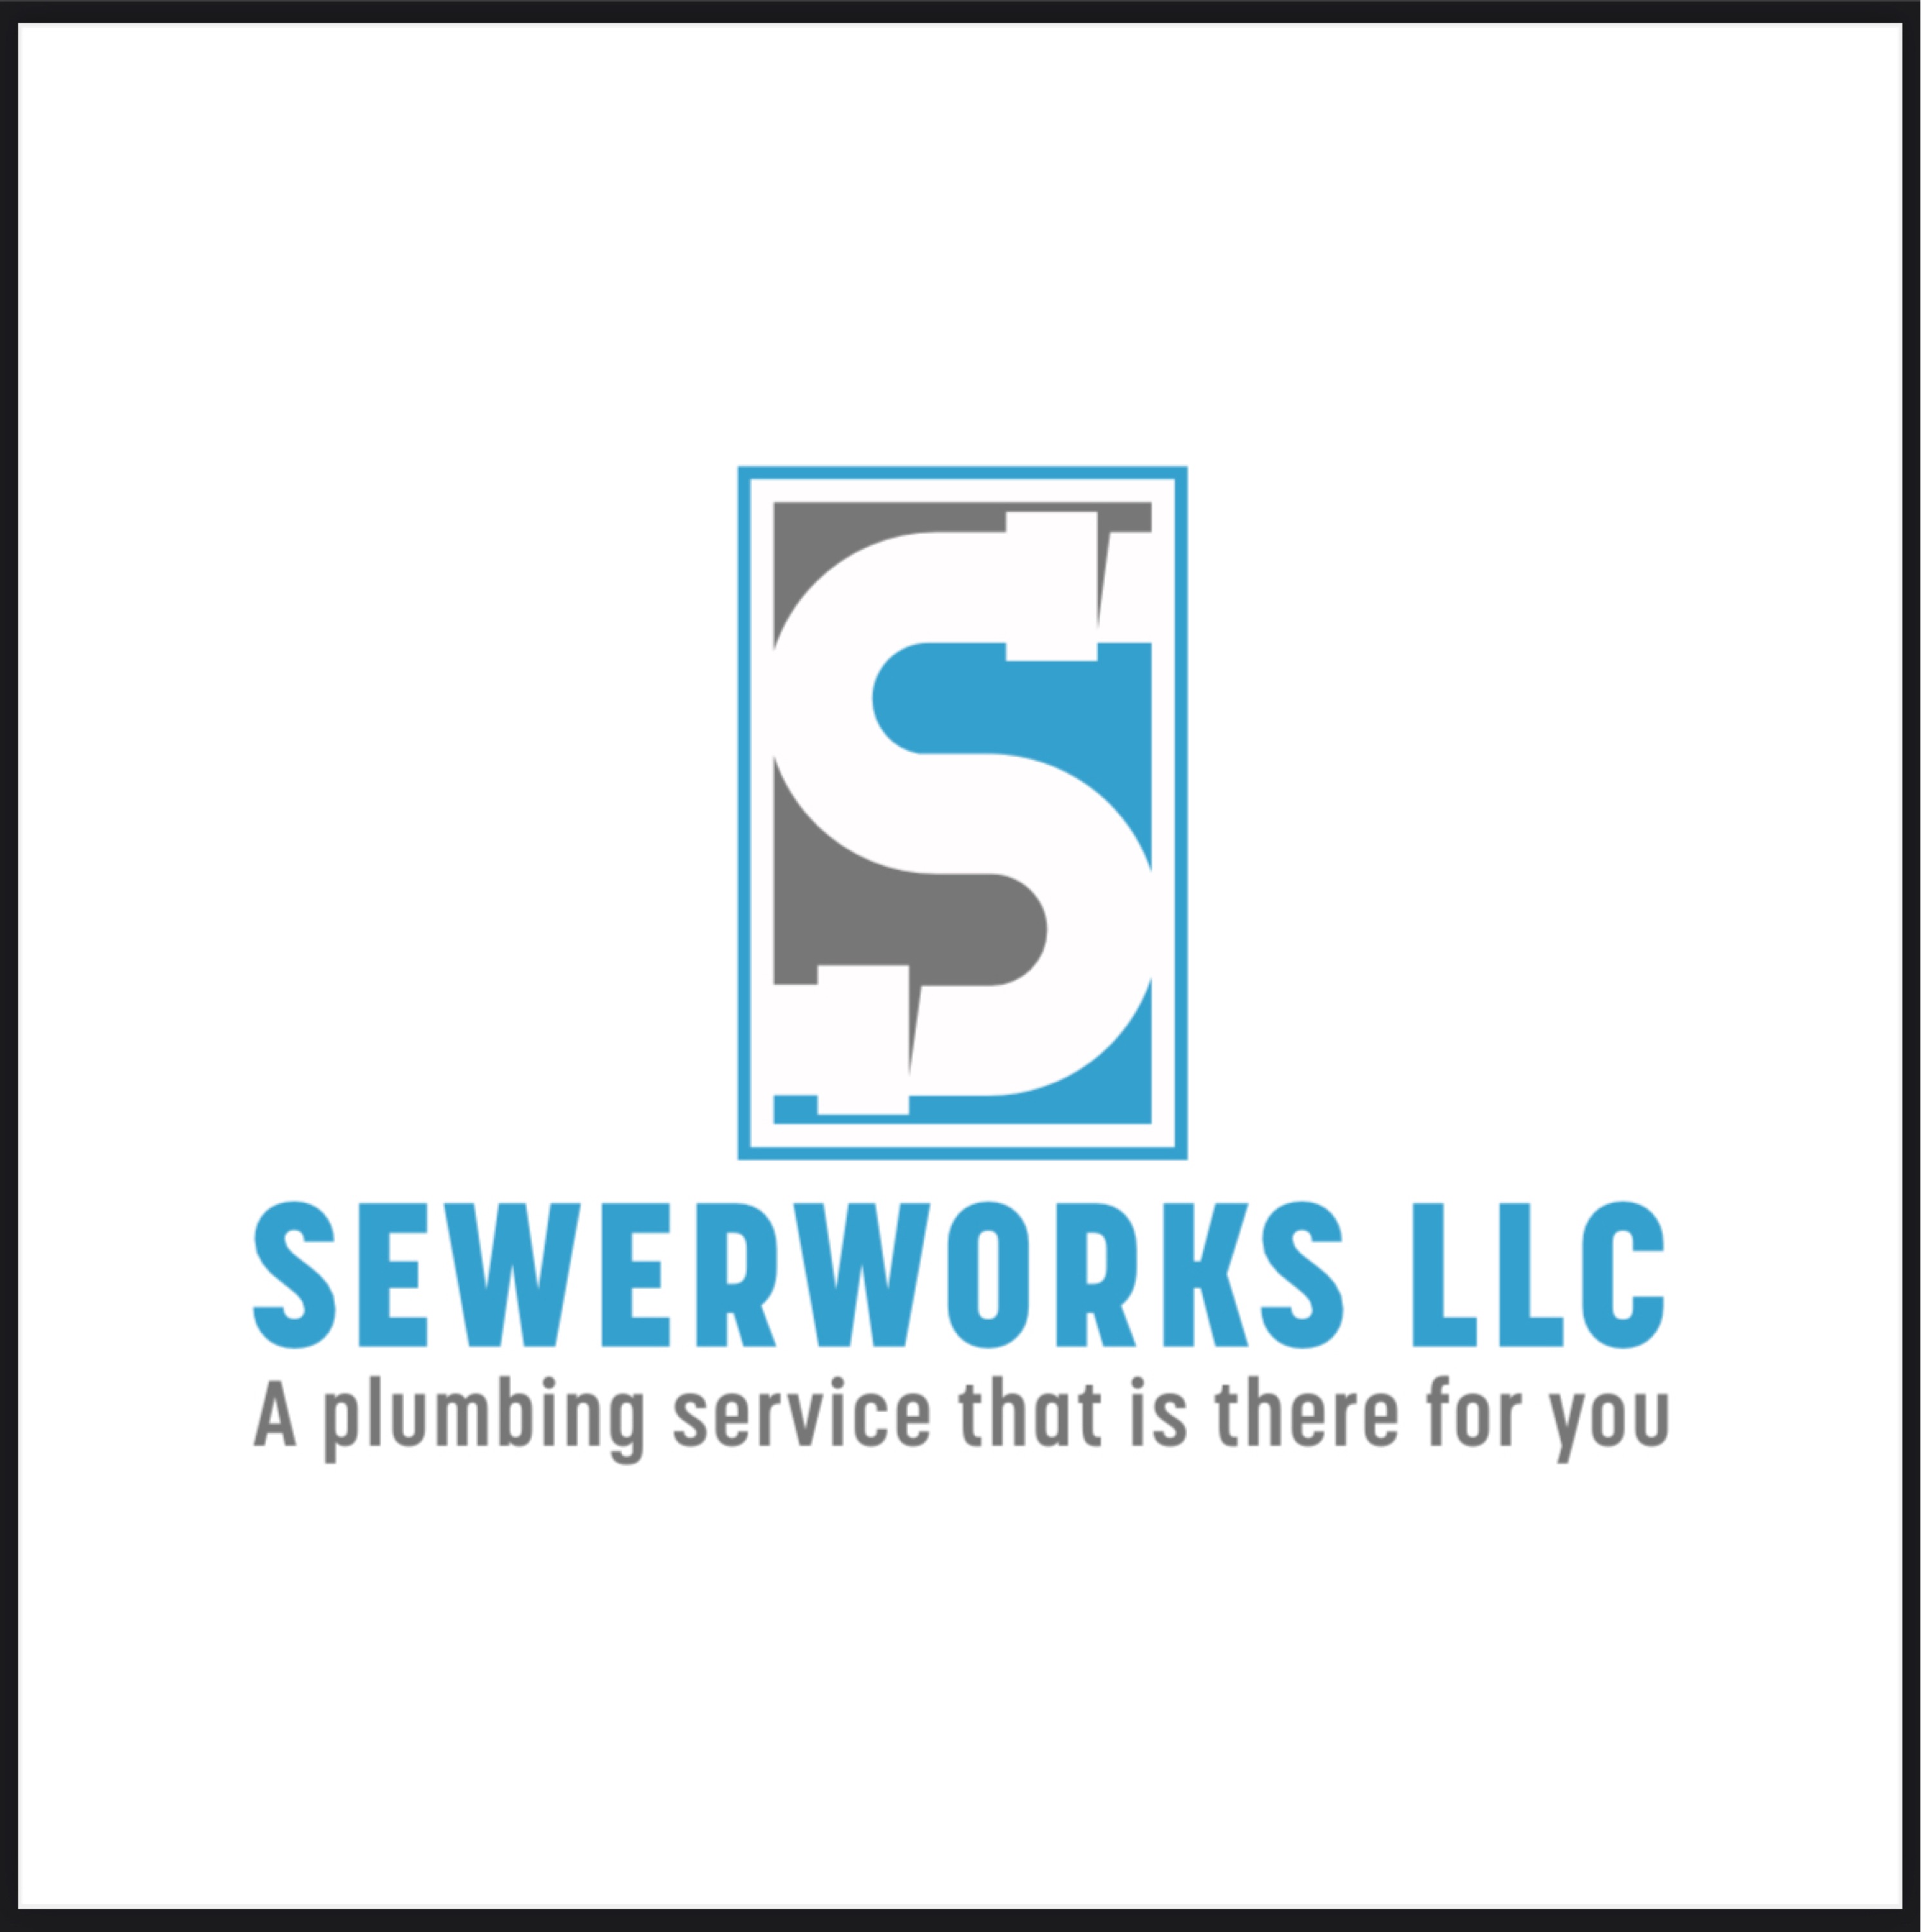 Sewerworks LLC Logo